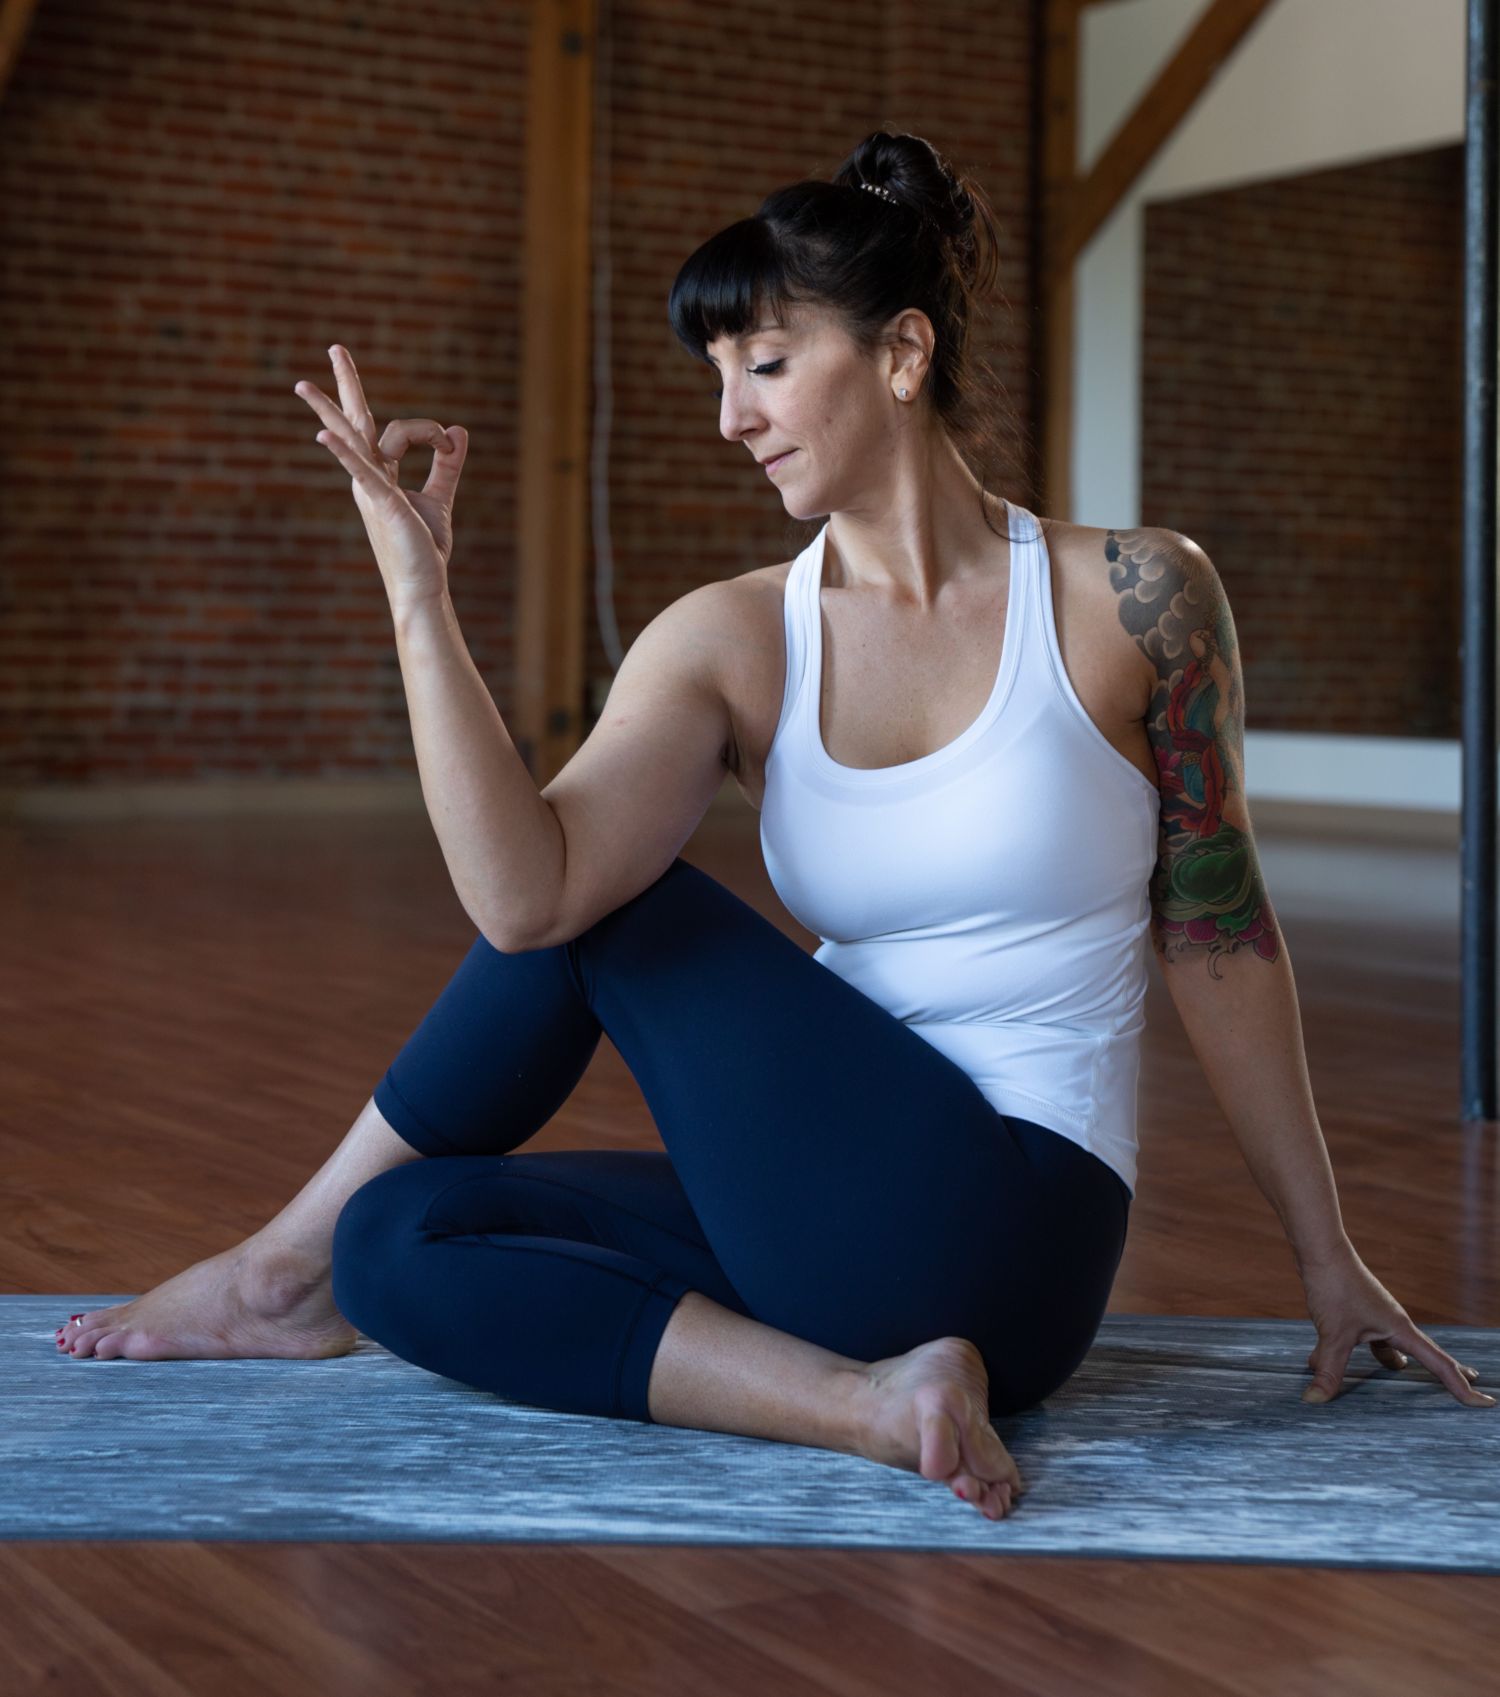 Balasana Yoga | Yoga motivation, Yoga poses for beginners, Yoga asanas